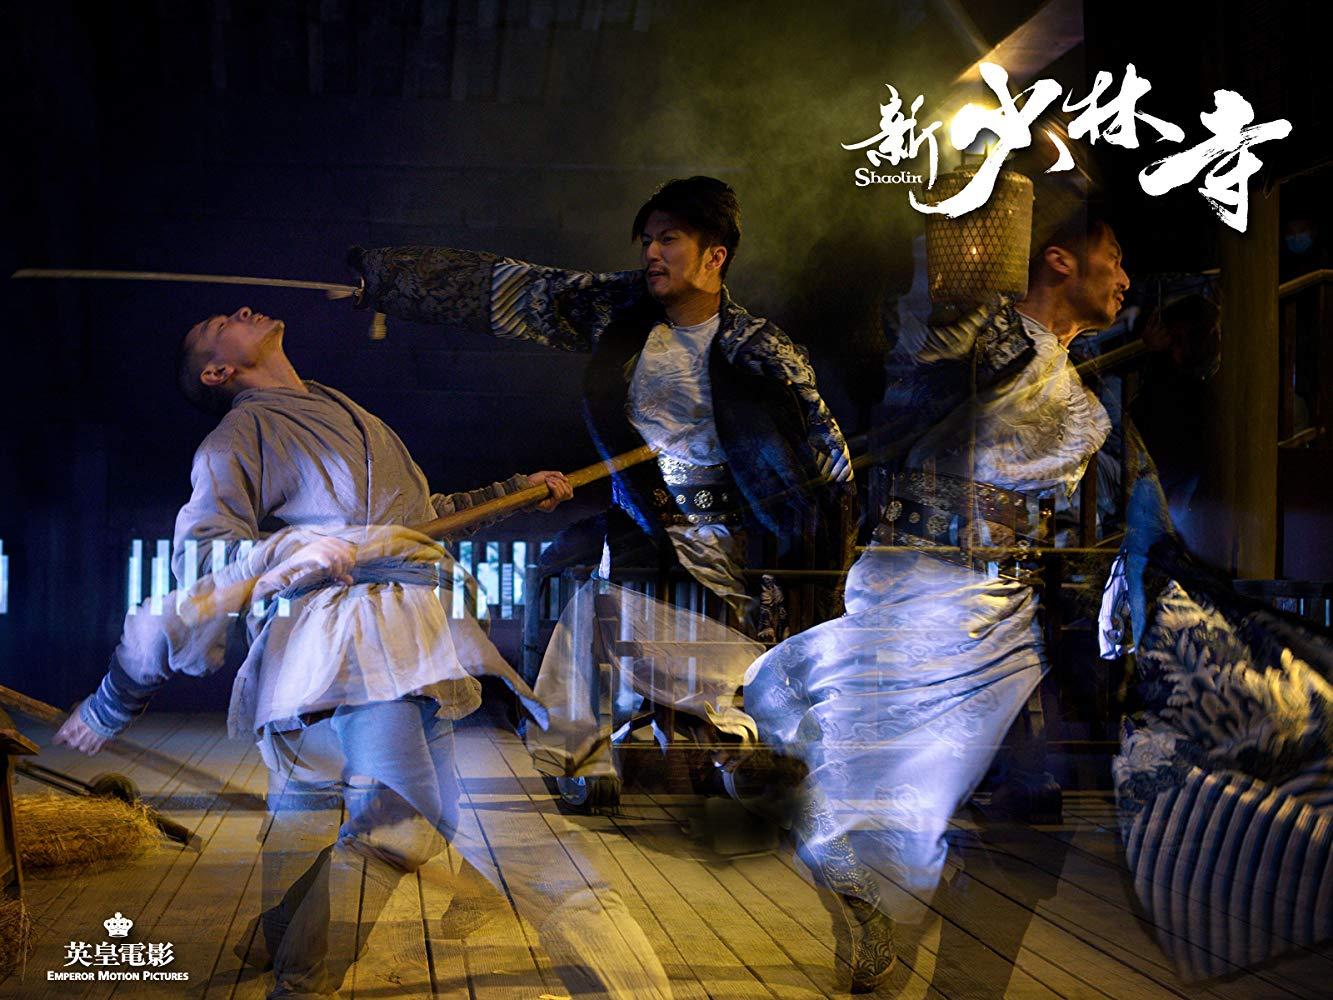 مشاهدة فيلم Shaolin (2011) مترجم